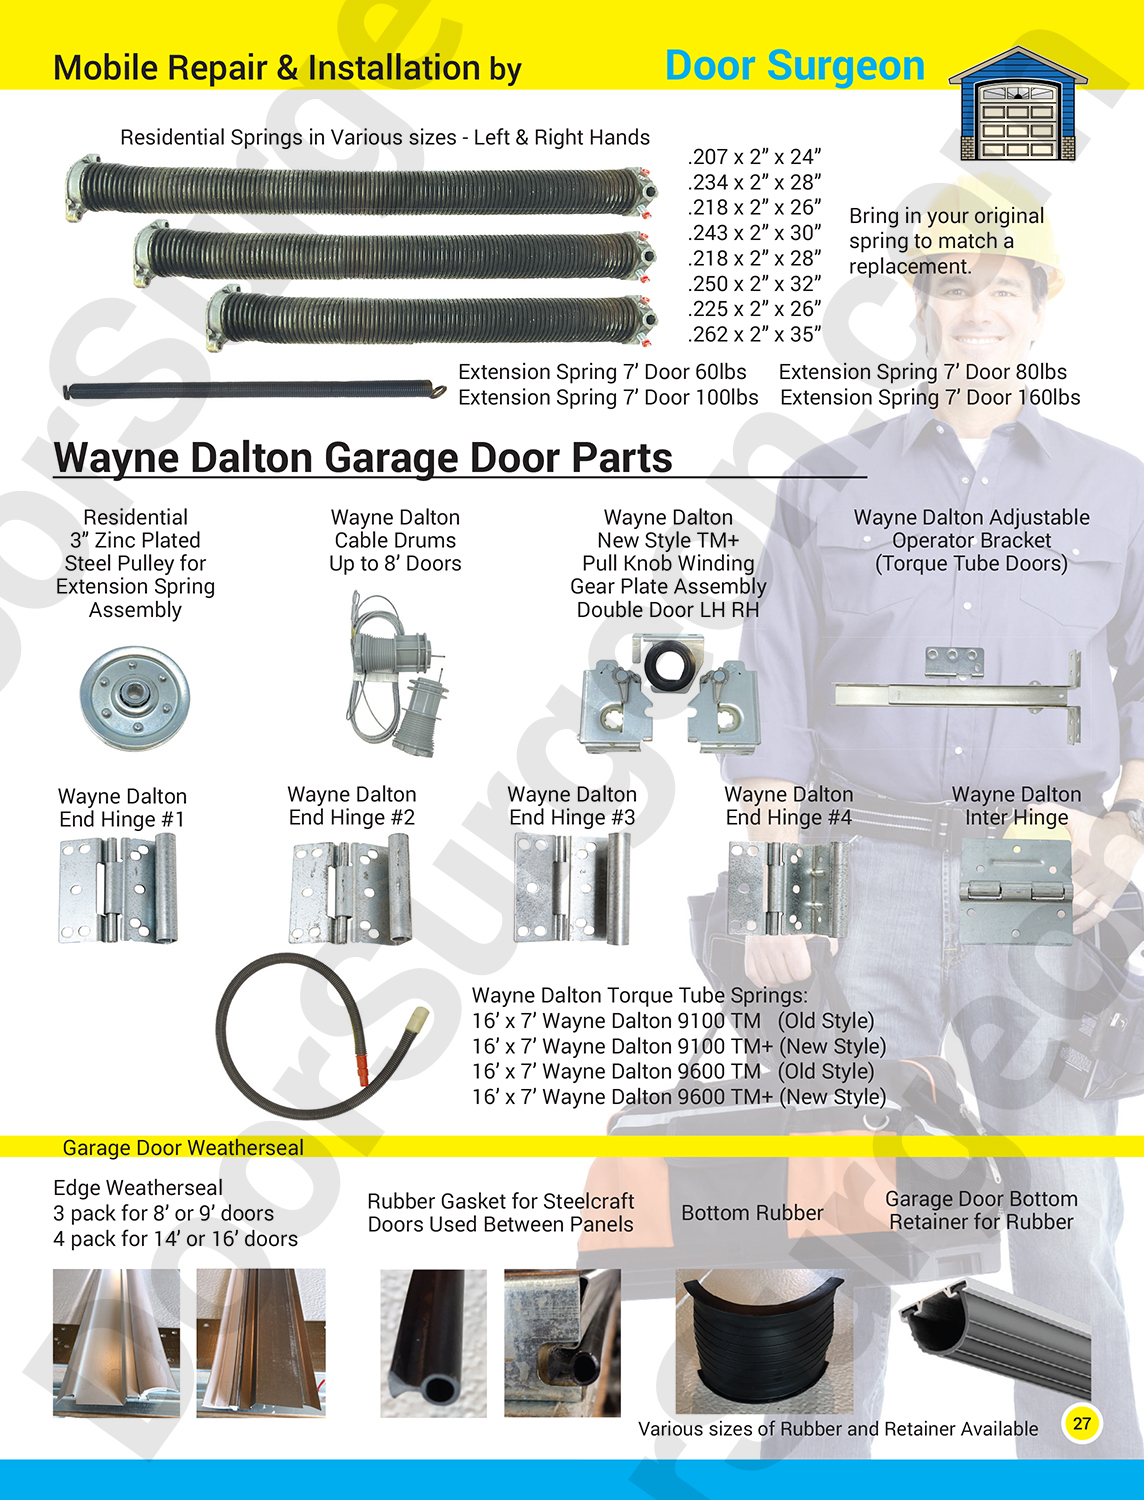 Replacement parts for Wayne Dalton garage doors spring drums gear plates pulleys hinges torque tubes